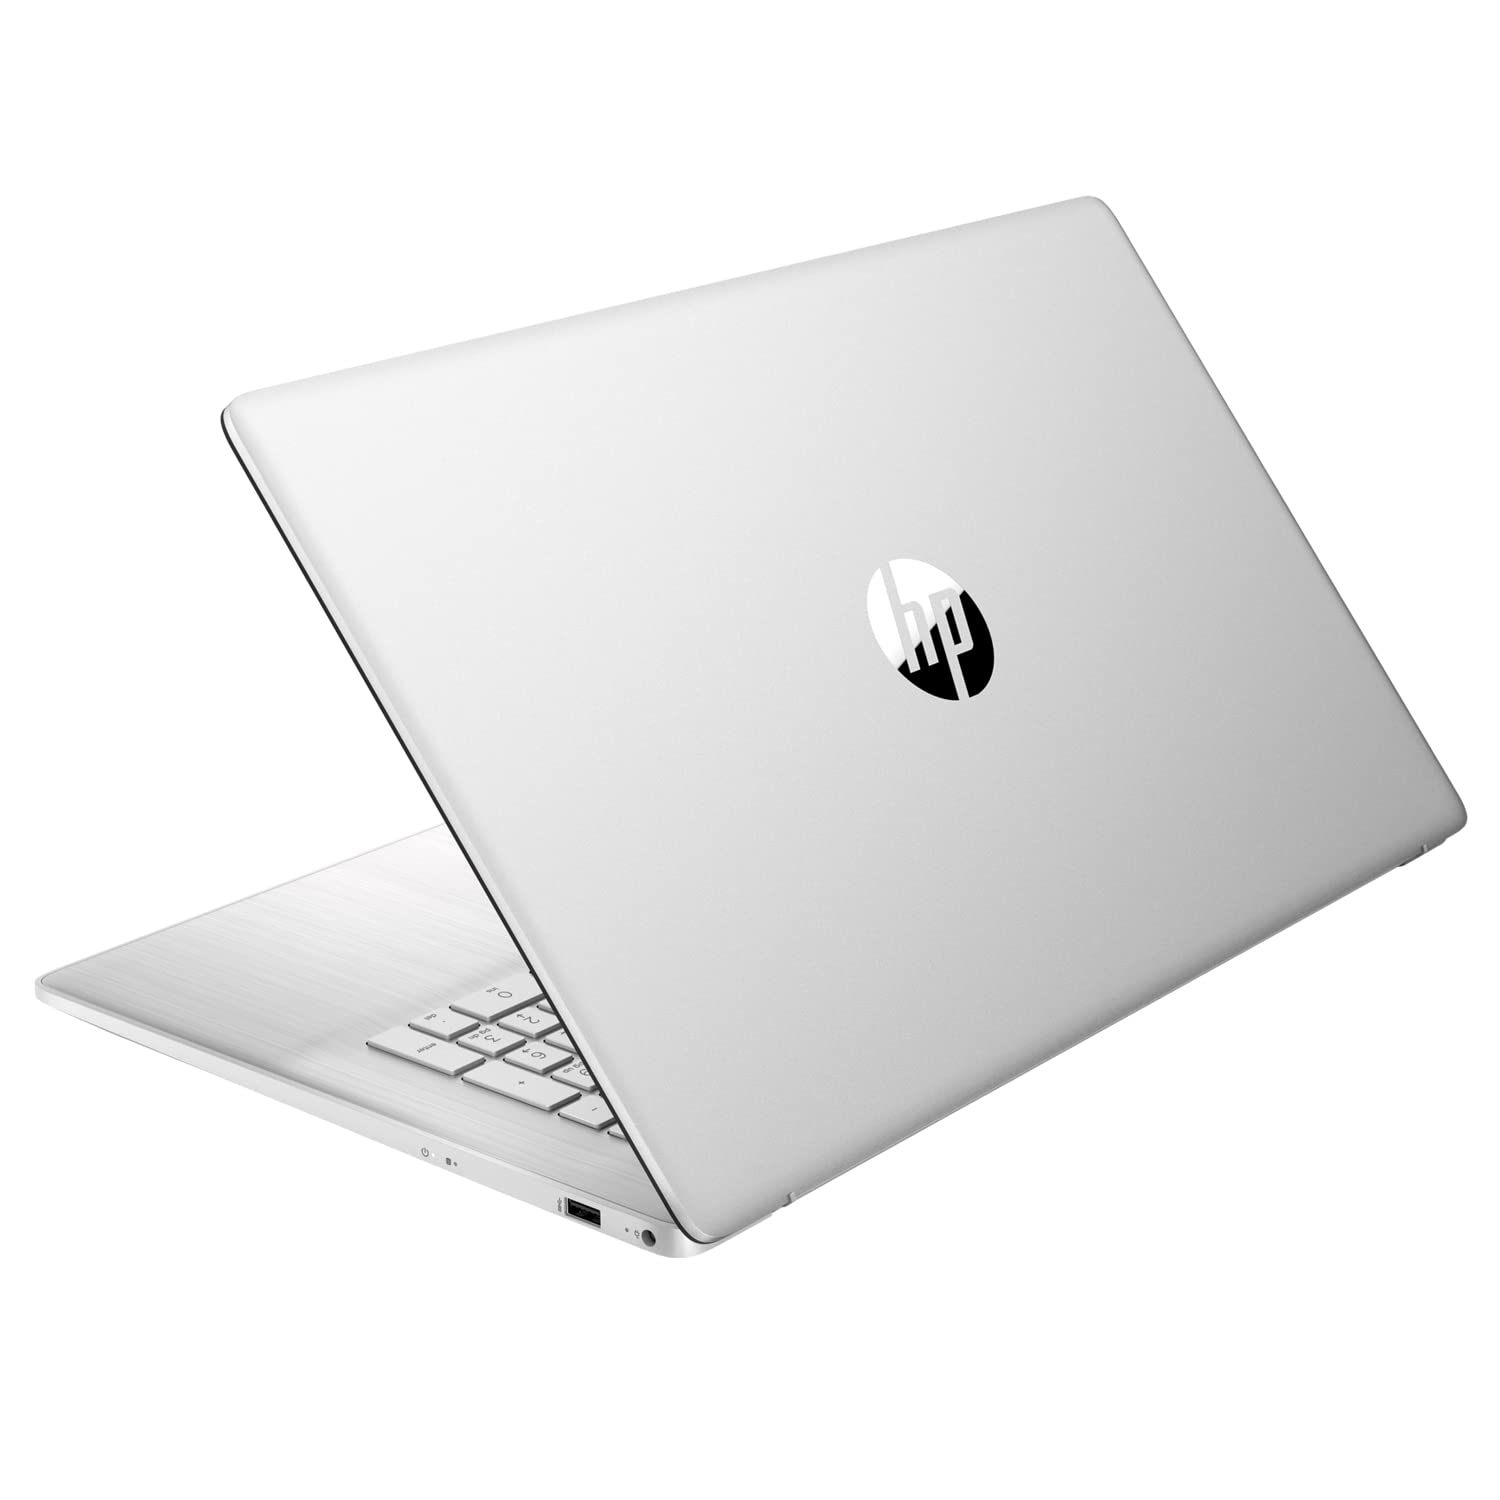 HP Newest 17t Laptop, 17.3